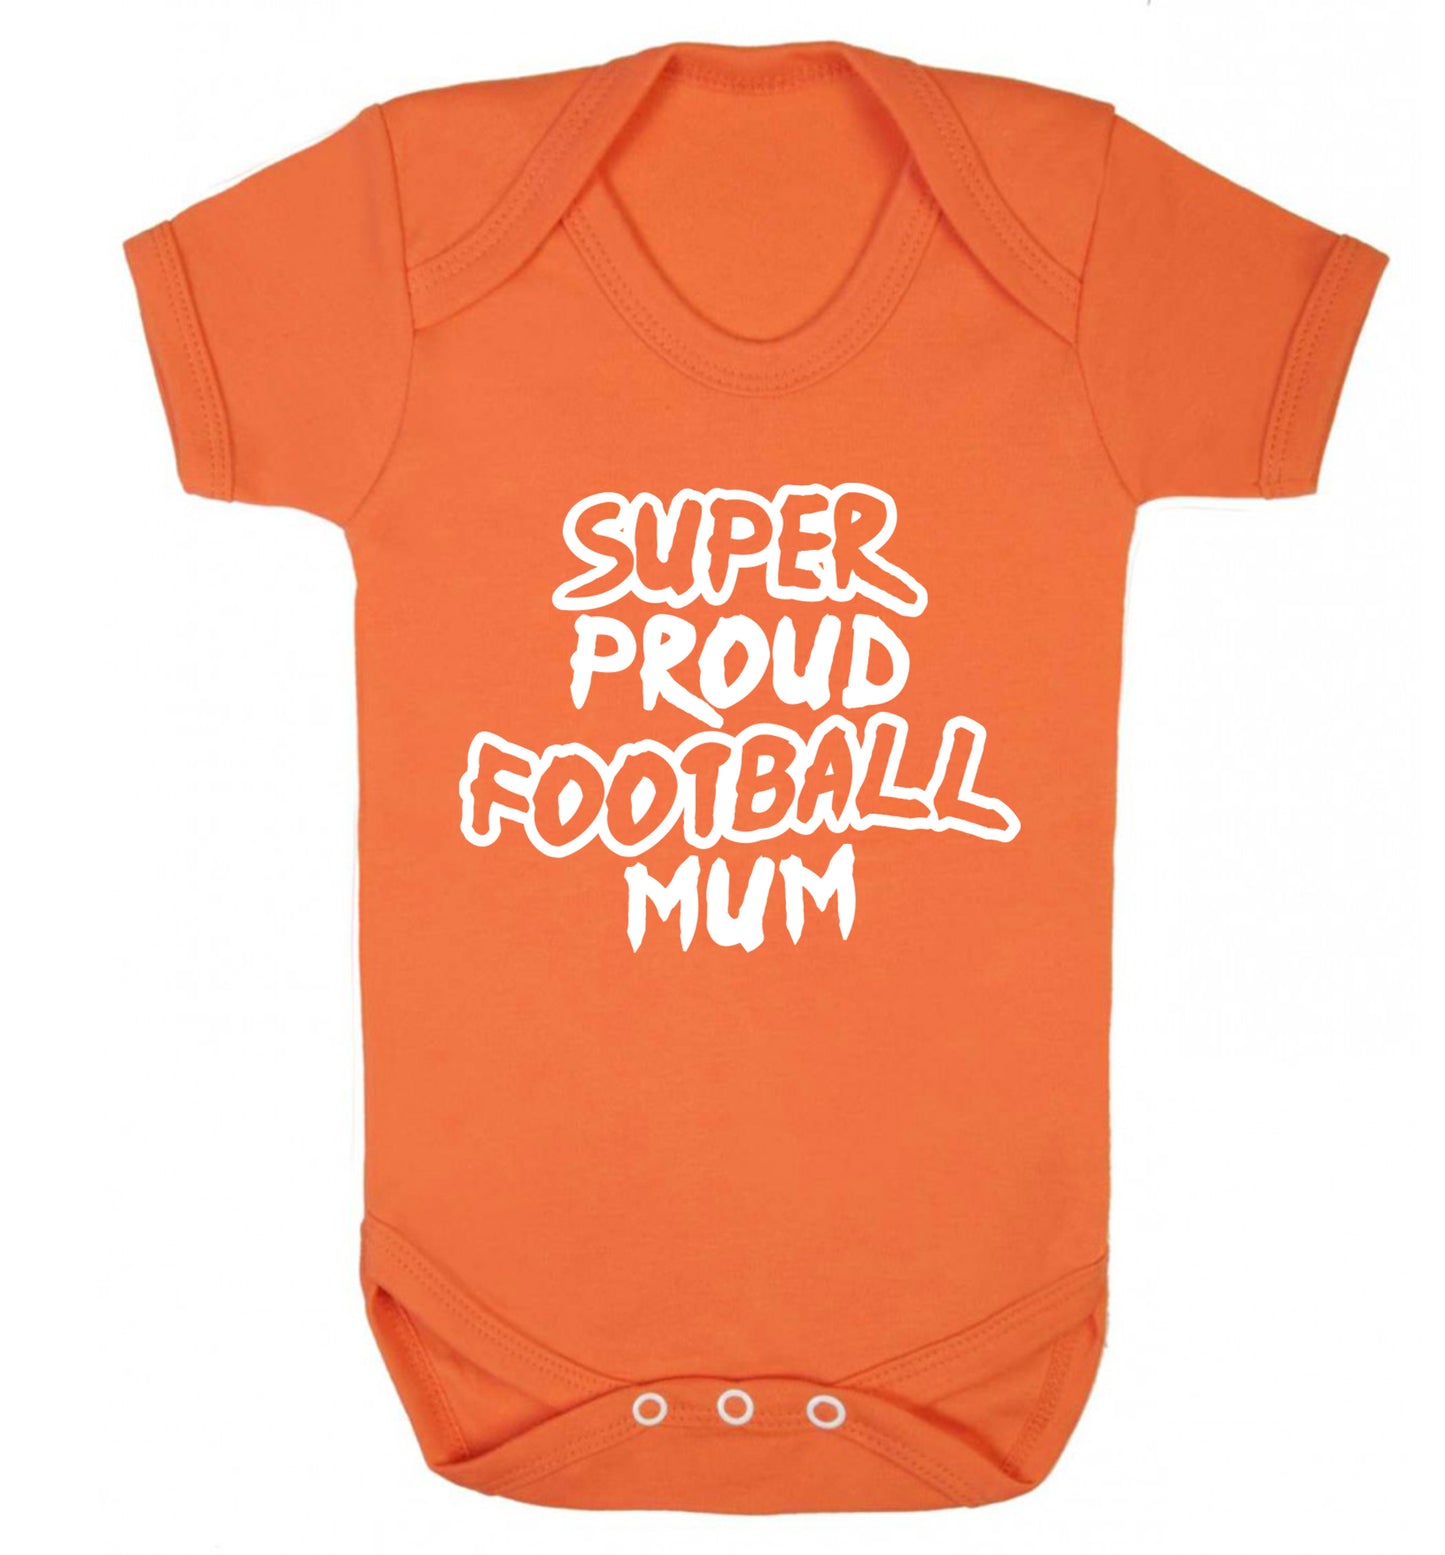 Super proud football mum Baby Vest orange 18-24 months